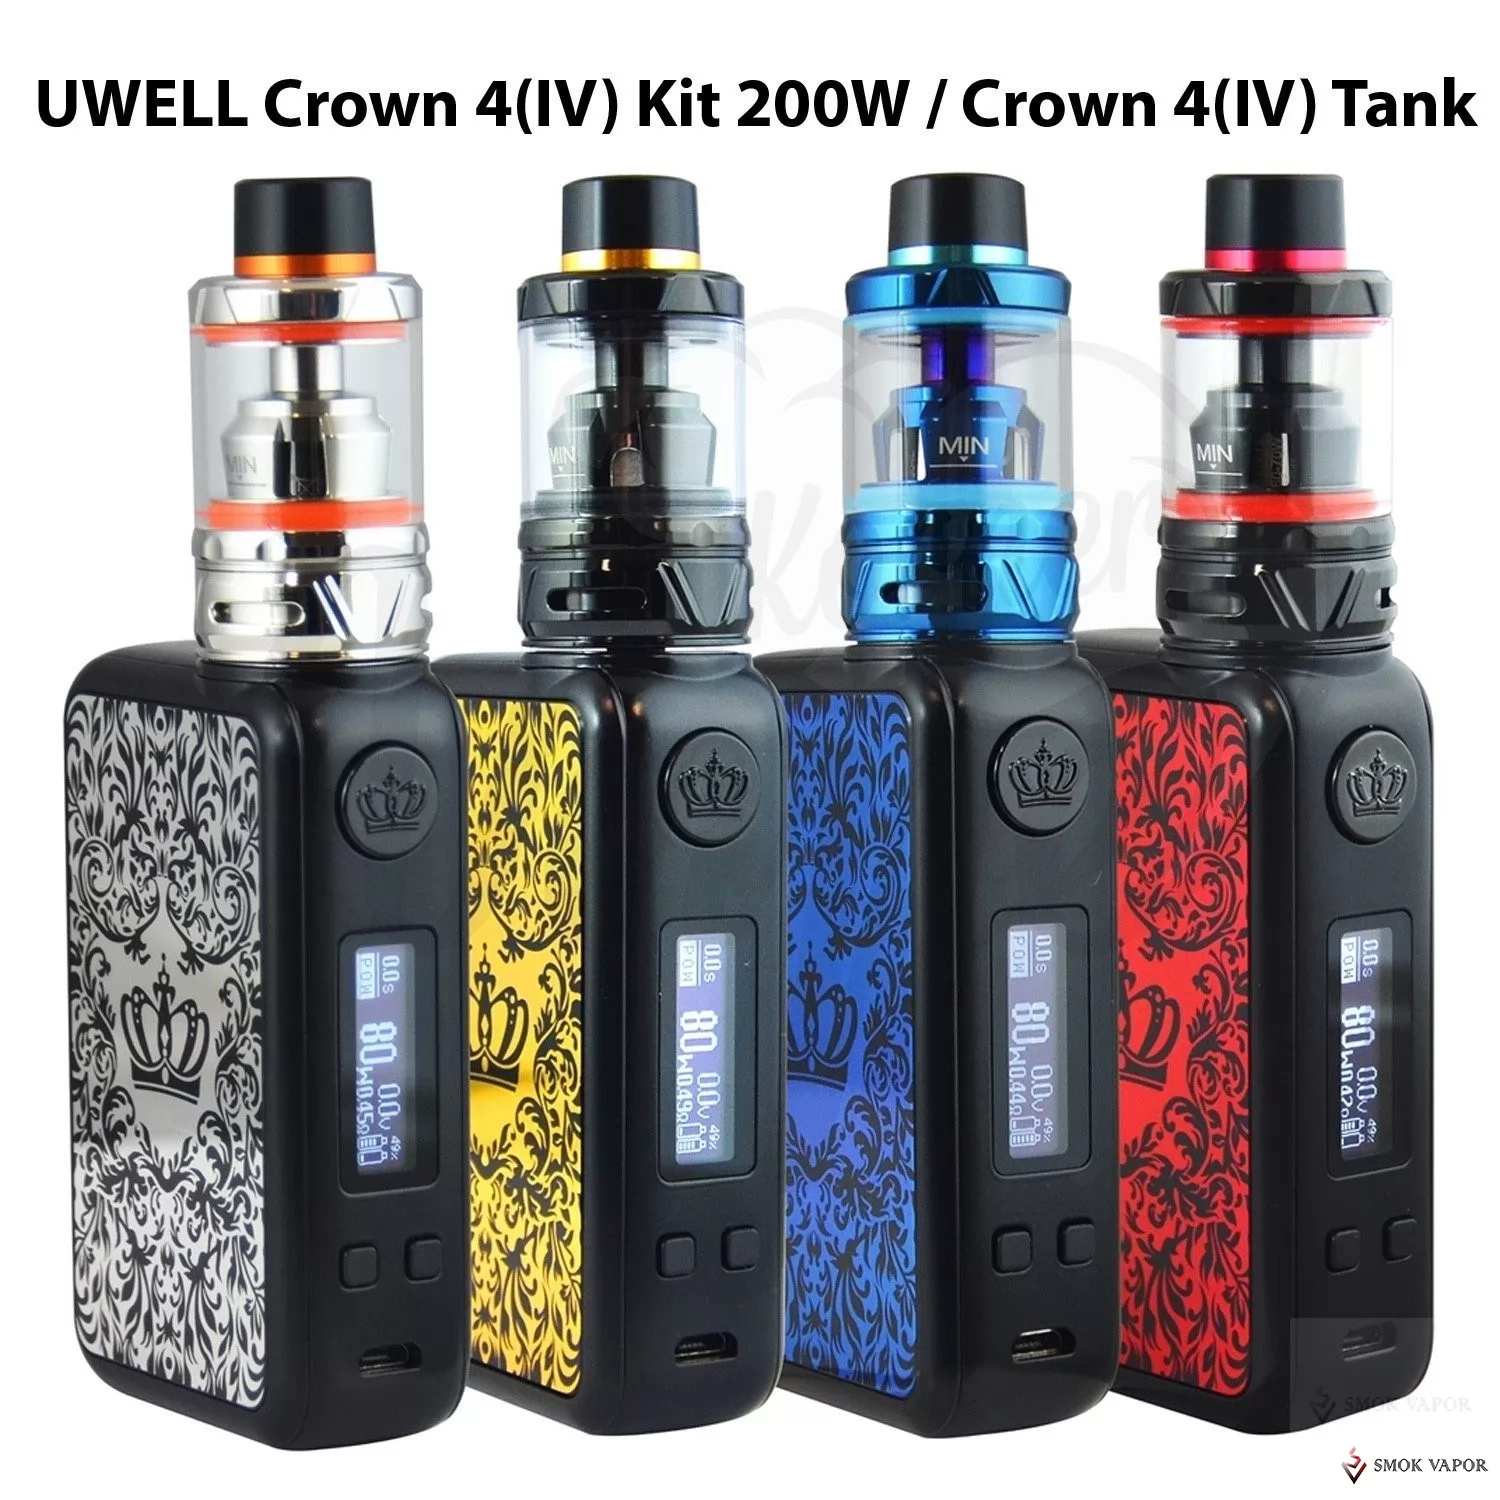 Uwell Crown IV kit